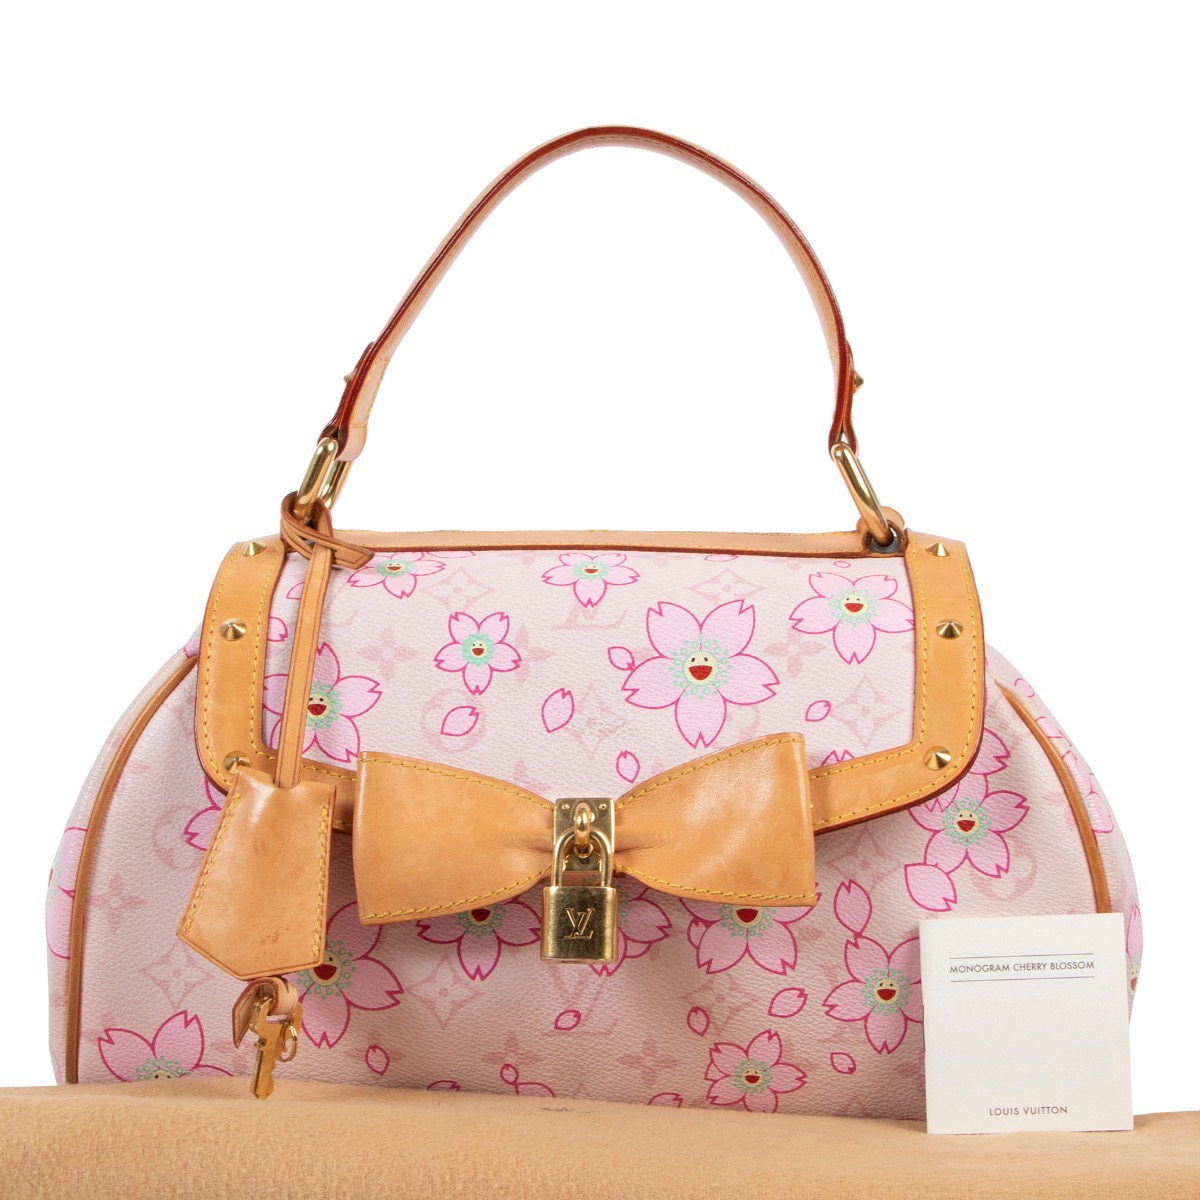 Shop Women's Louis Vuitton Pink Bags